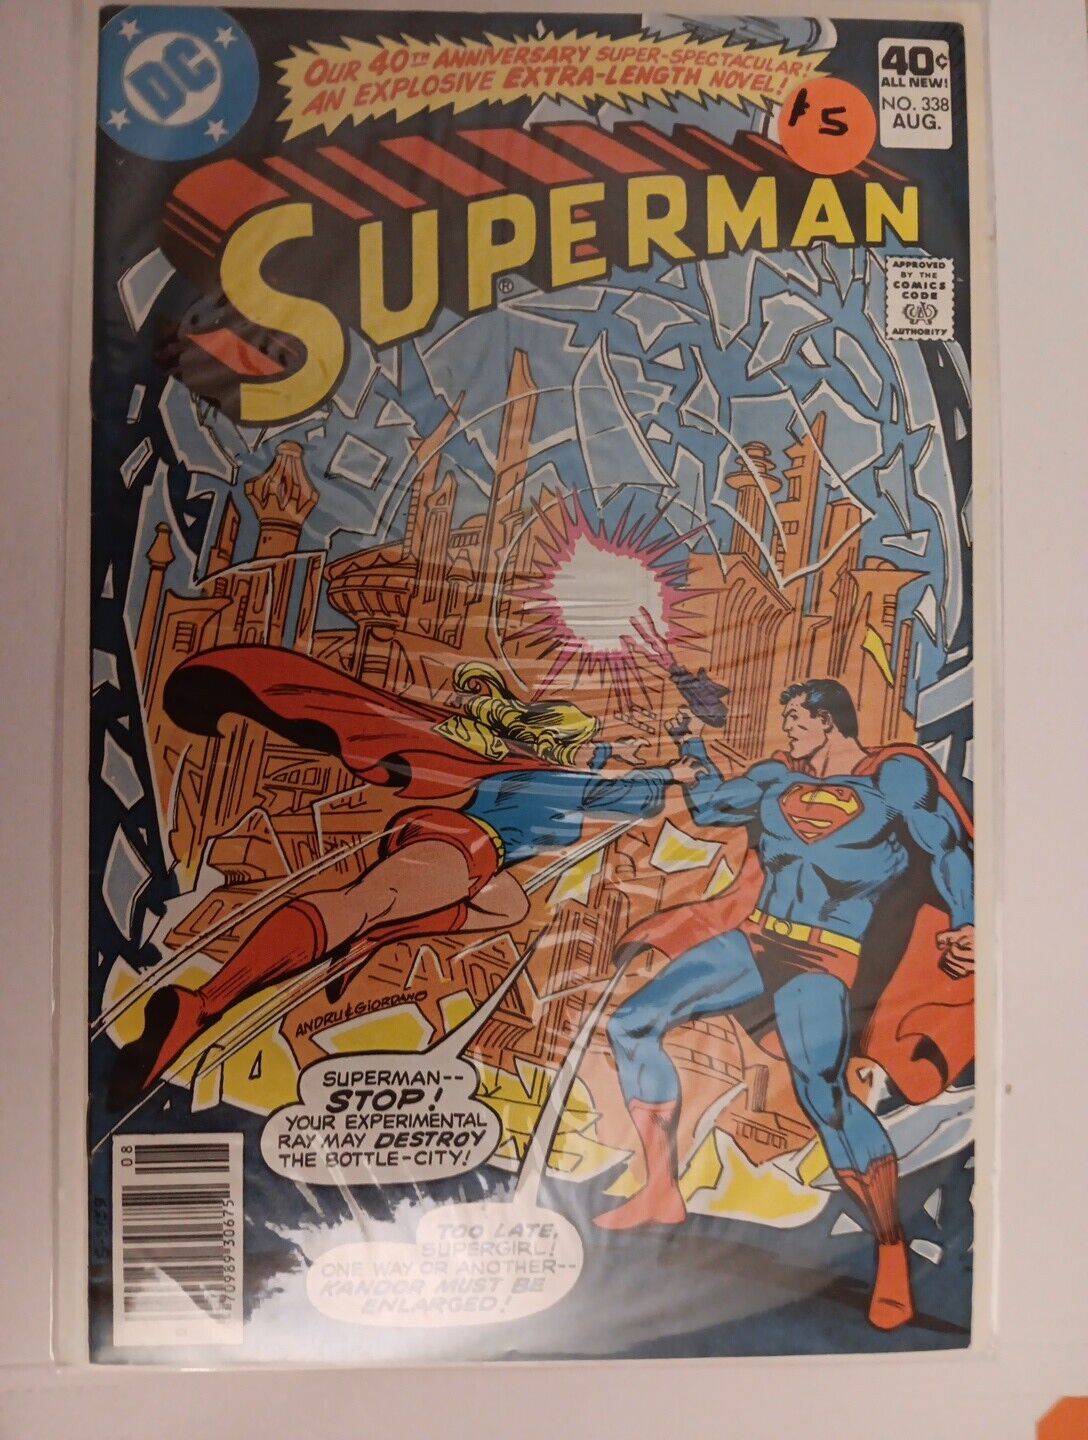 Superman Issue 338, 40th Anniversary Issue, Kandor, Vintage DC Comics, 1979🔥🔥